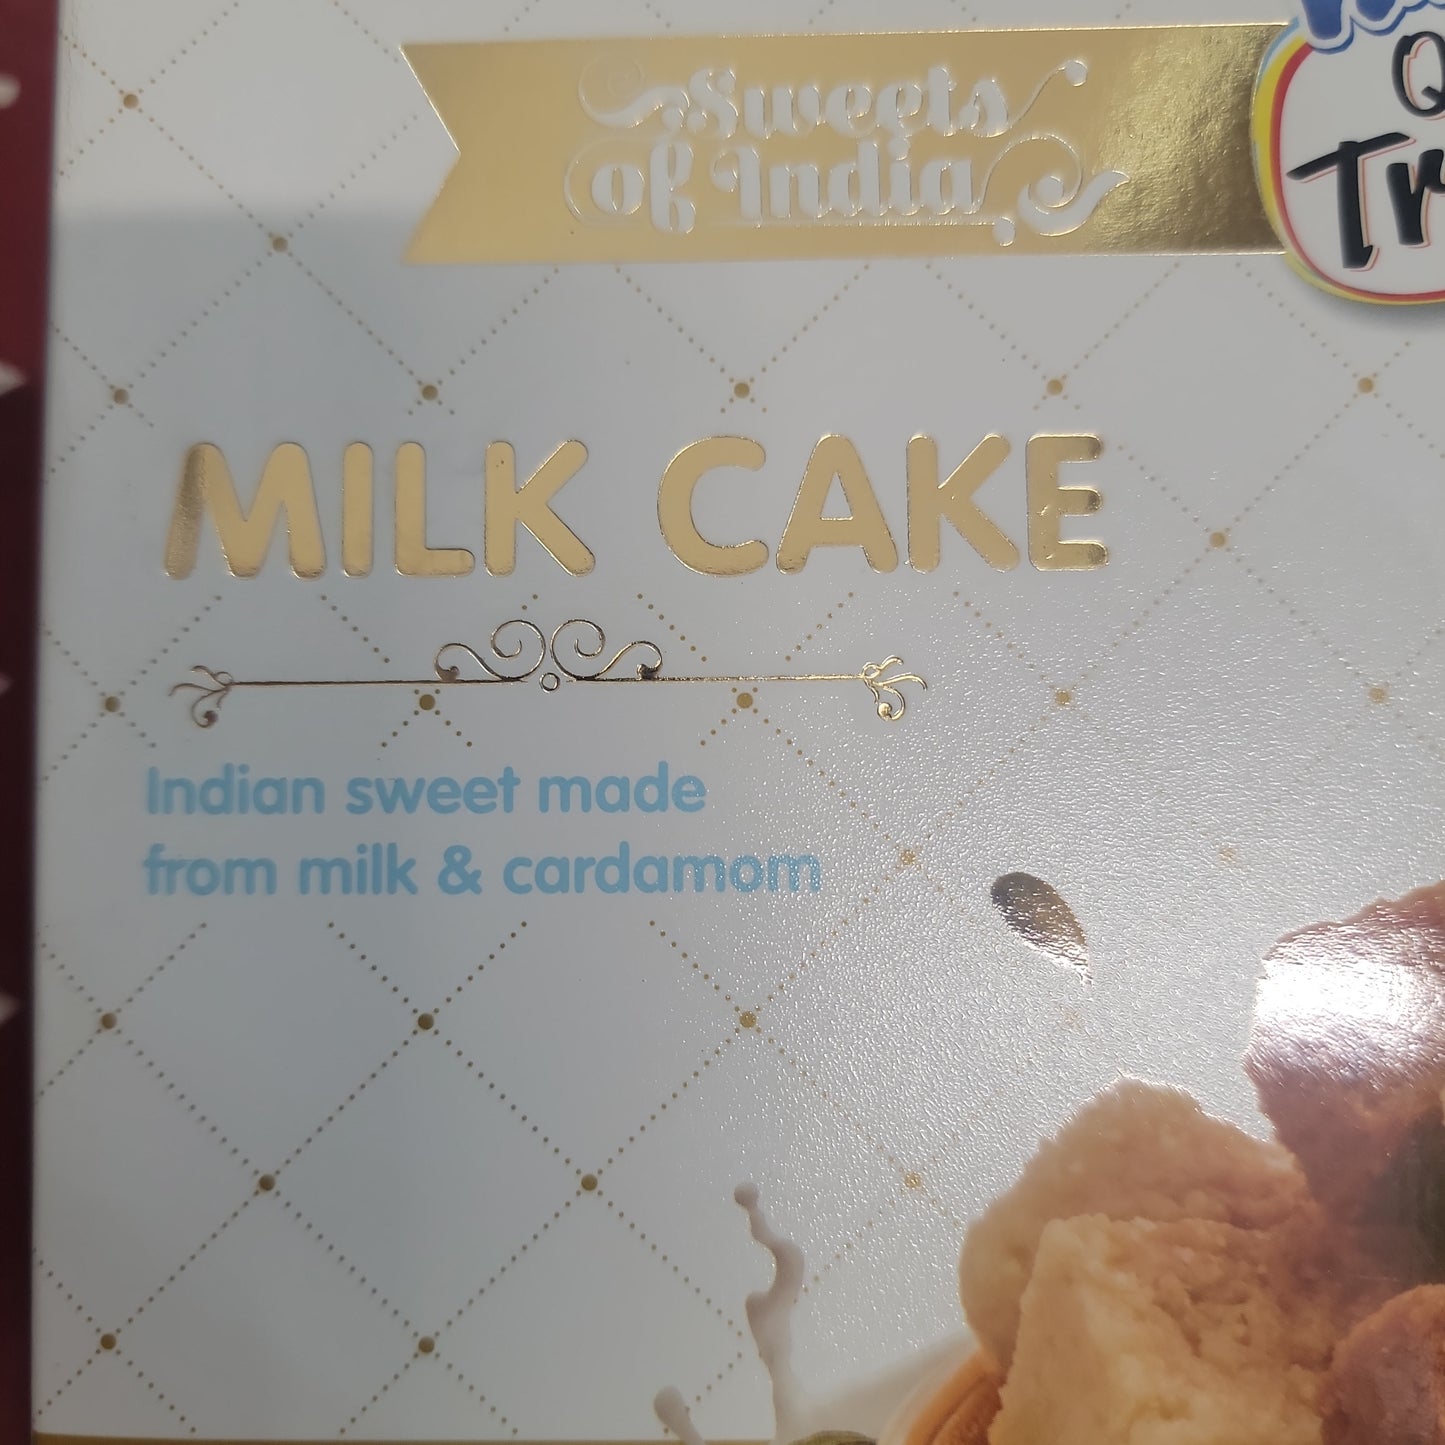 Milk cake